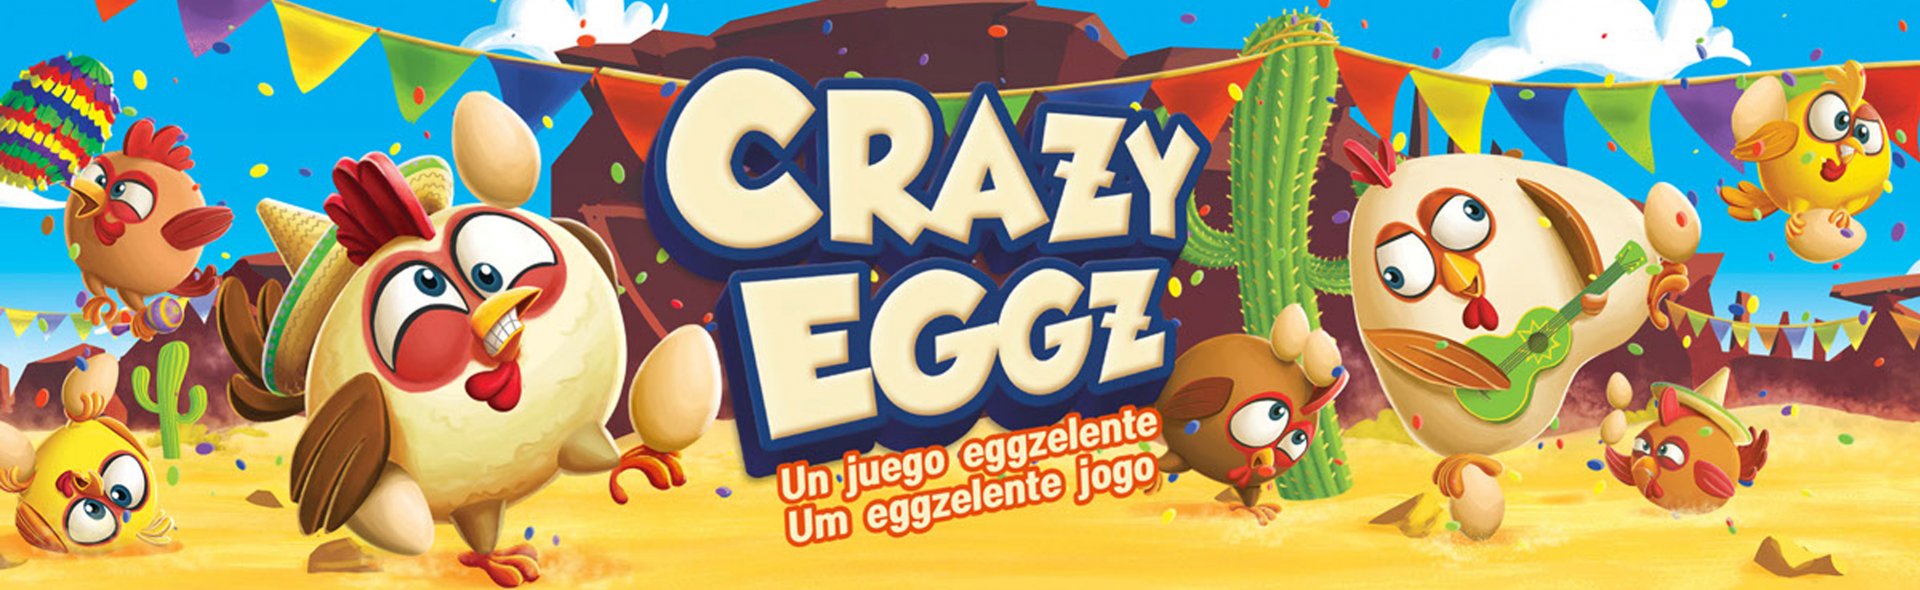 crazy eggs.jpg